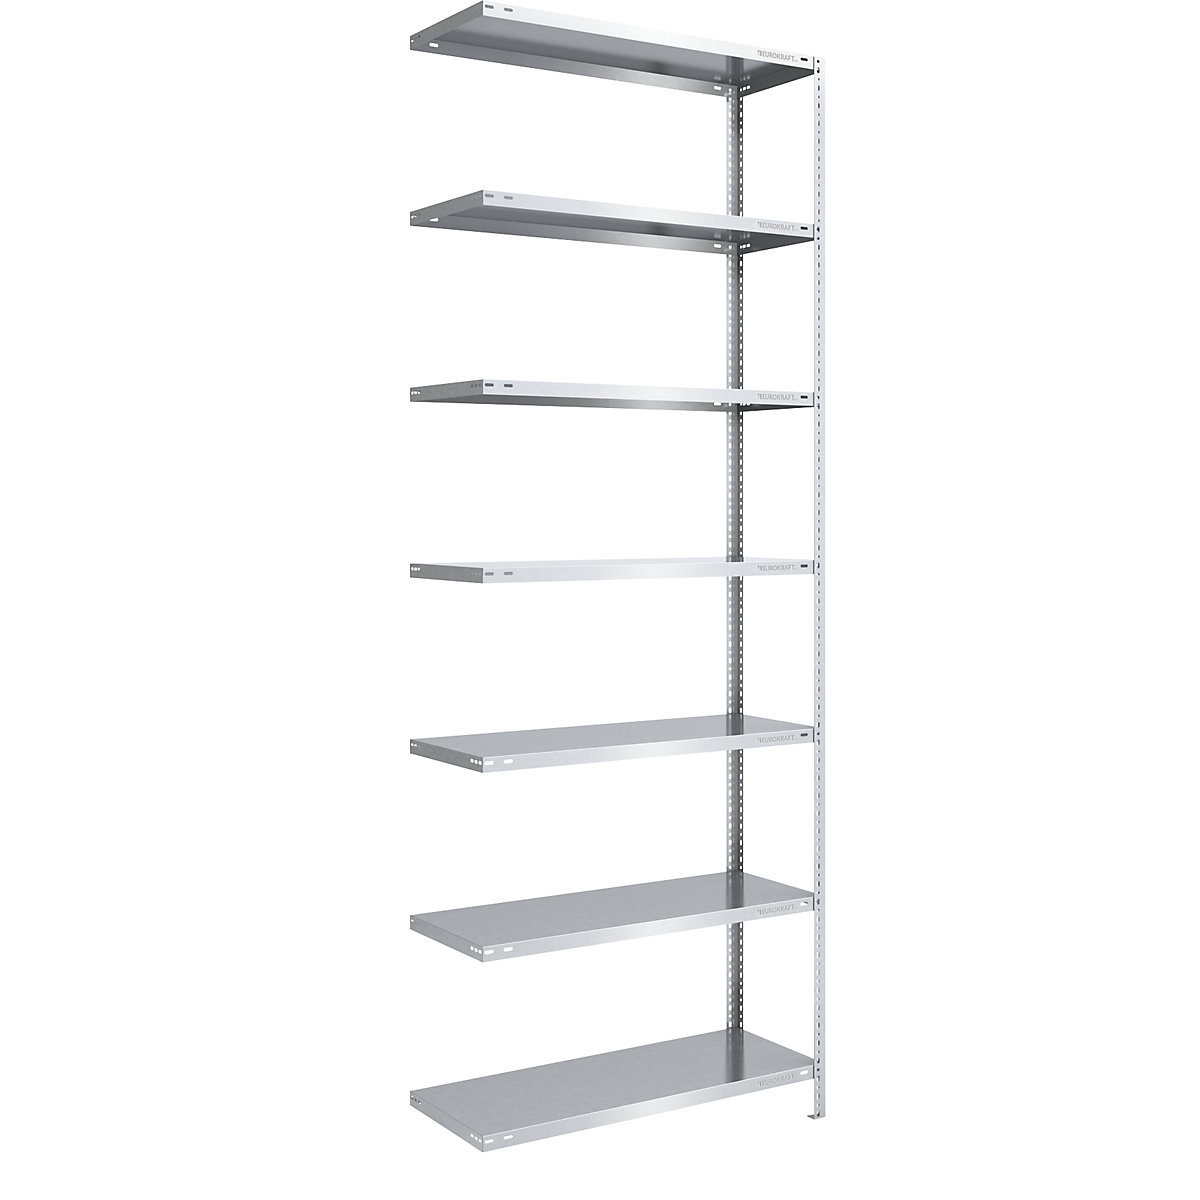 Bolt-together storage shelving, zinc plated, medium duty – eurokraft pro, shelf unit height 3000 mm, shelf width 1000 mm, depth 500 mm, extension shelf unit-6